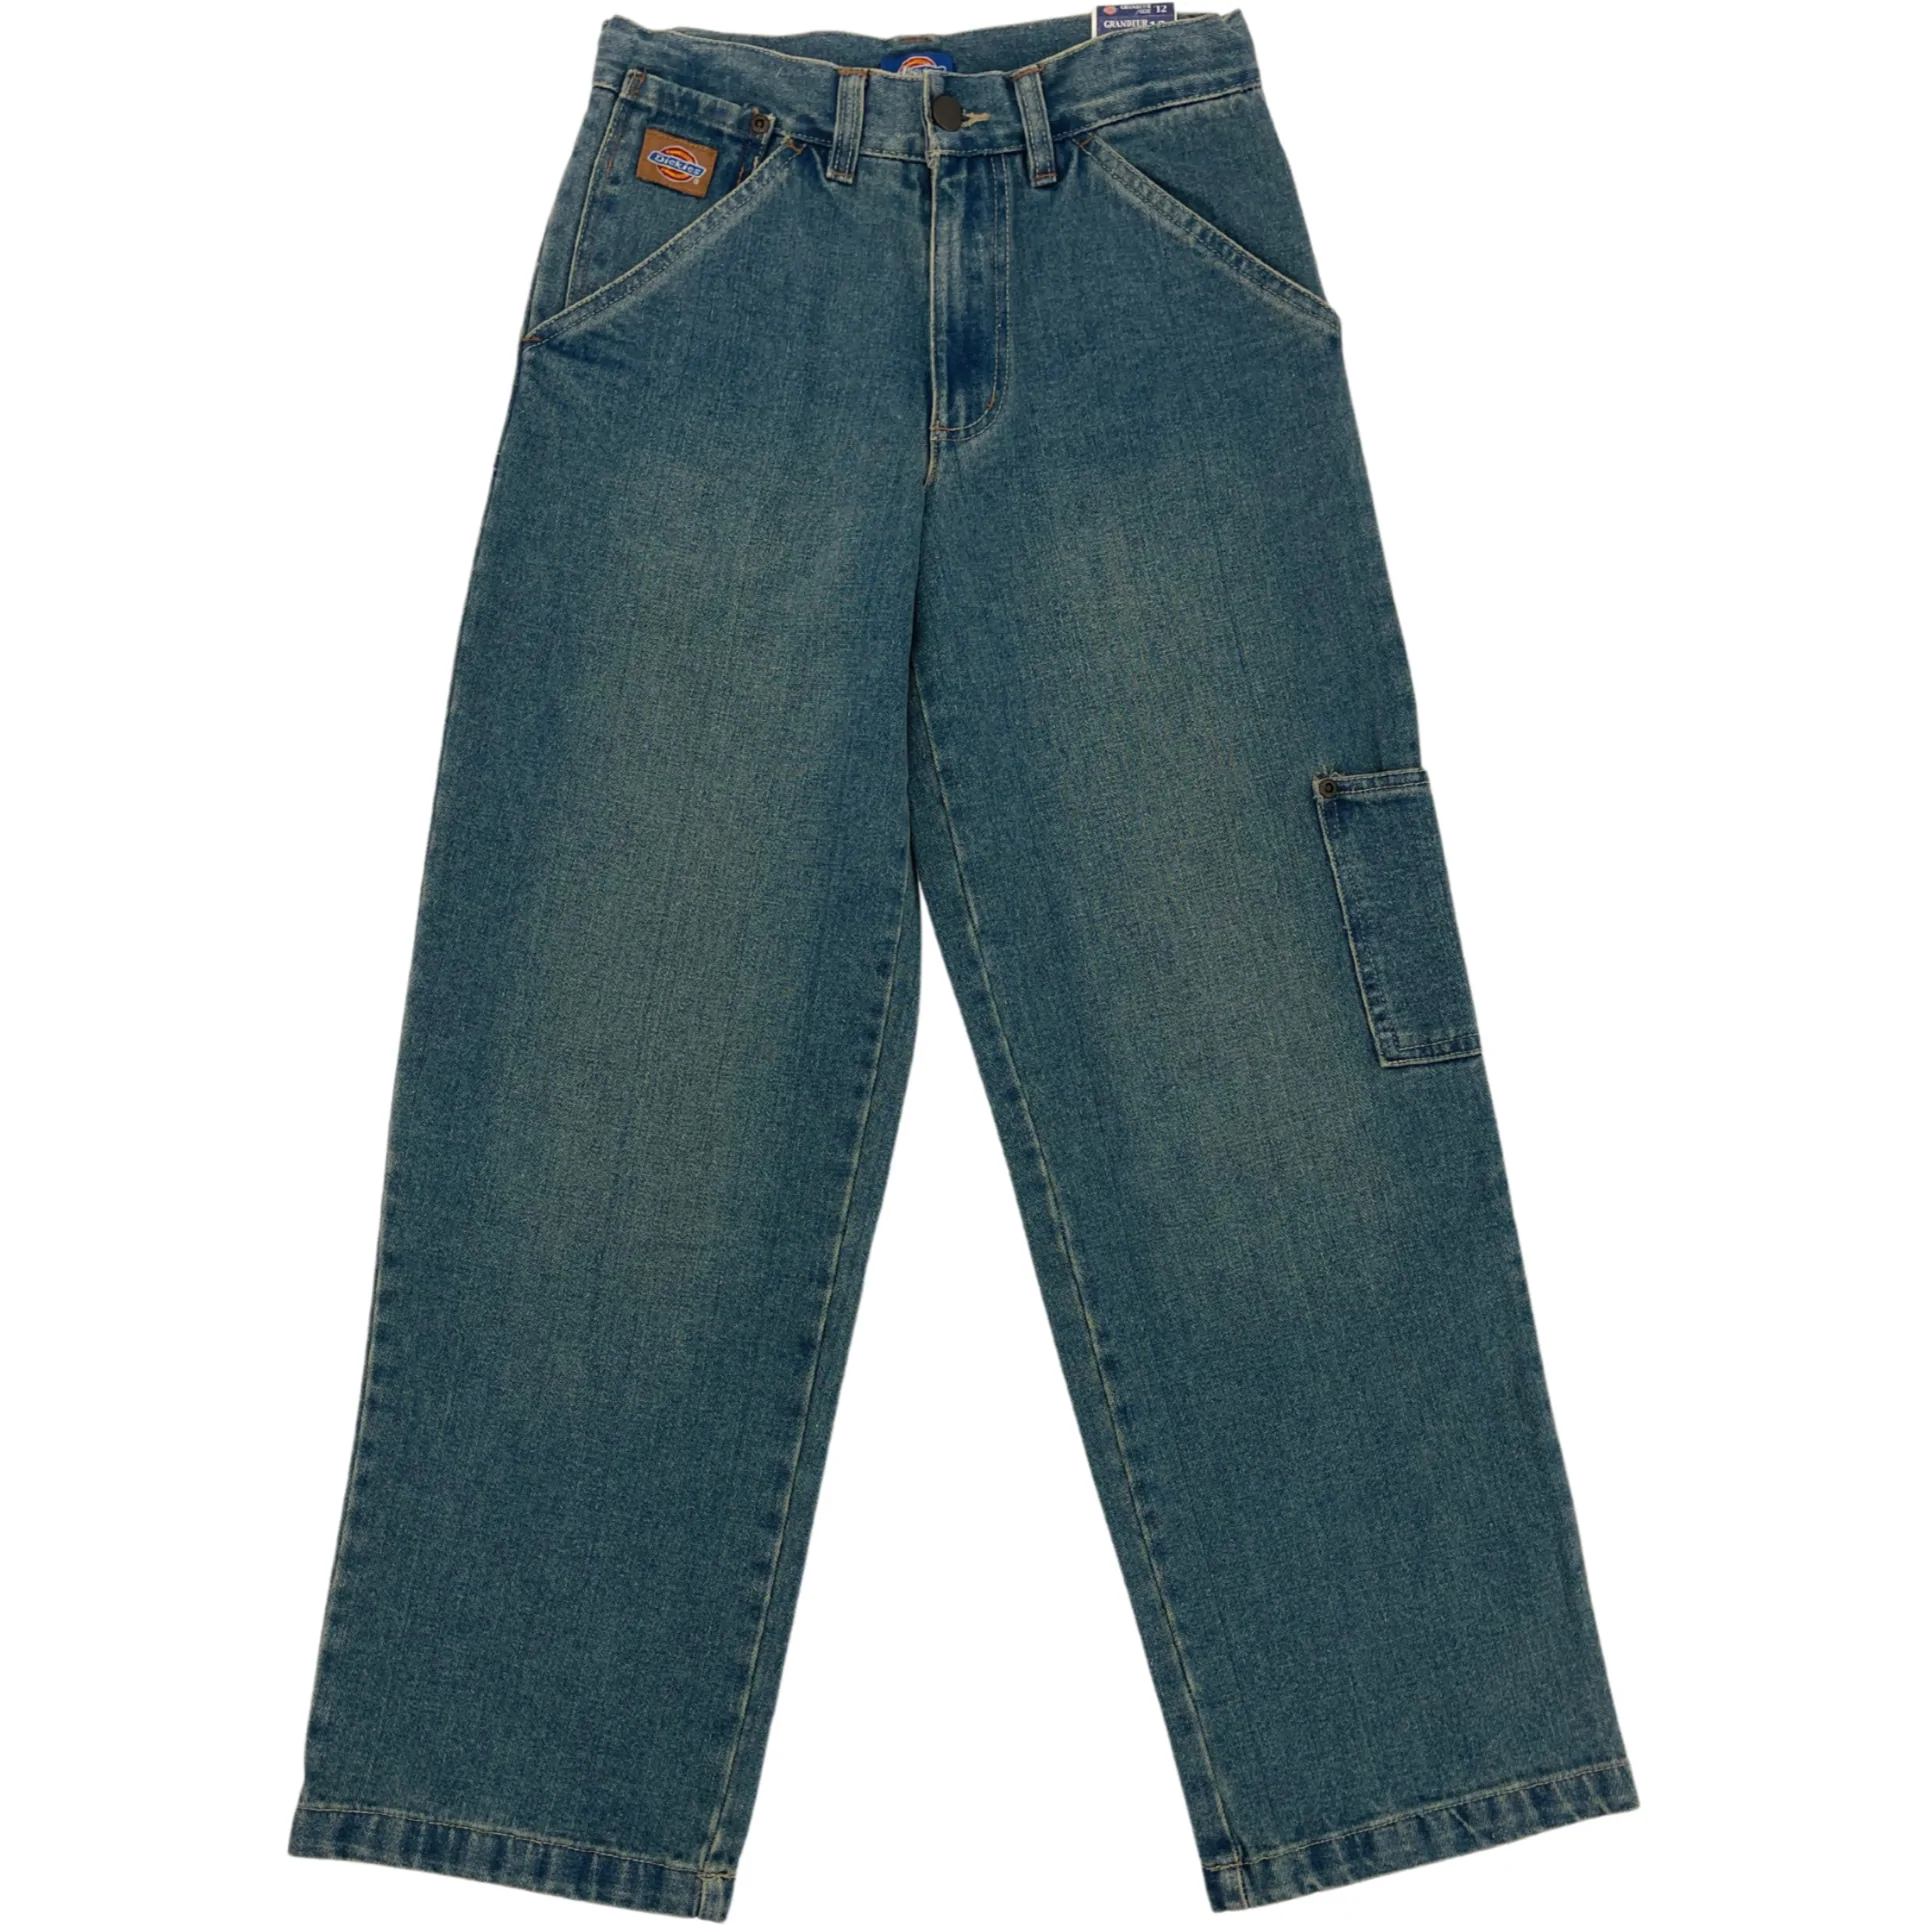 Dickies Boy's Jeans / Light Wash / Adjustable Waist / Size 12